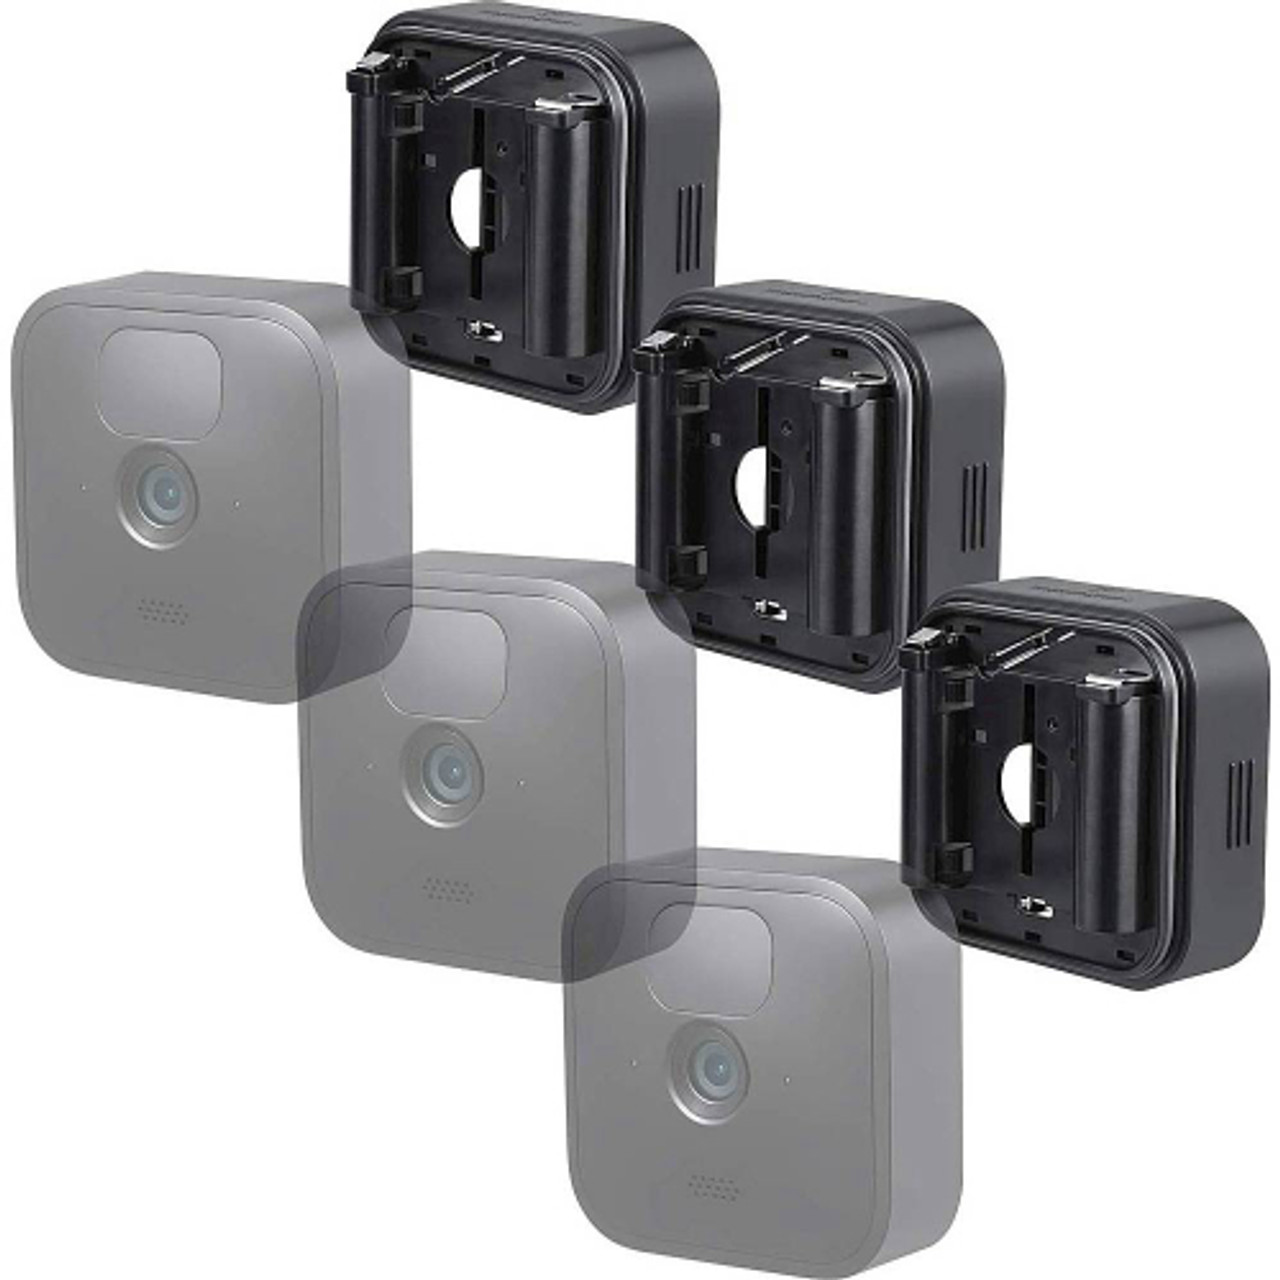 Wasserstein - Battery Extension for Select Blink Surveillance Cameras (3-Pack) - Black